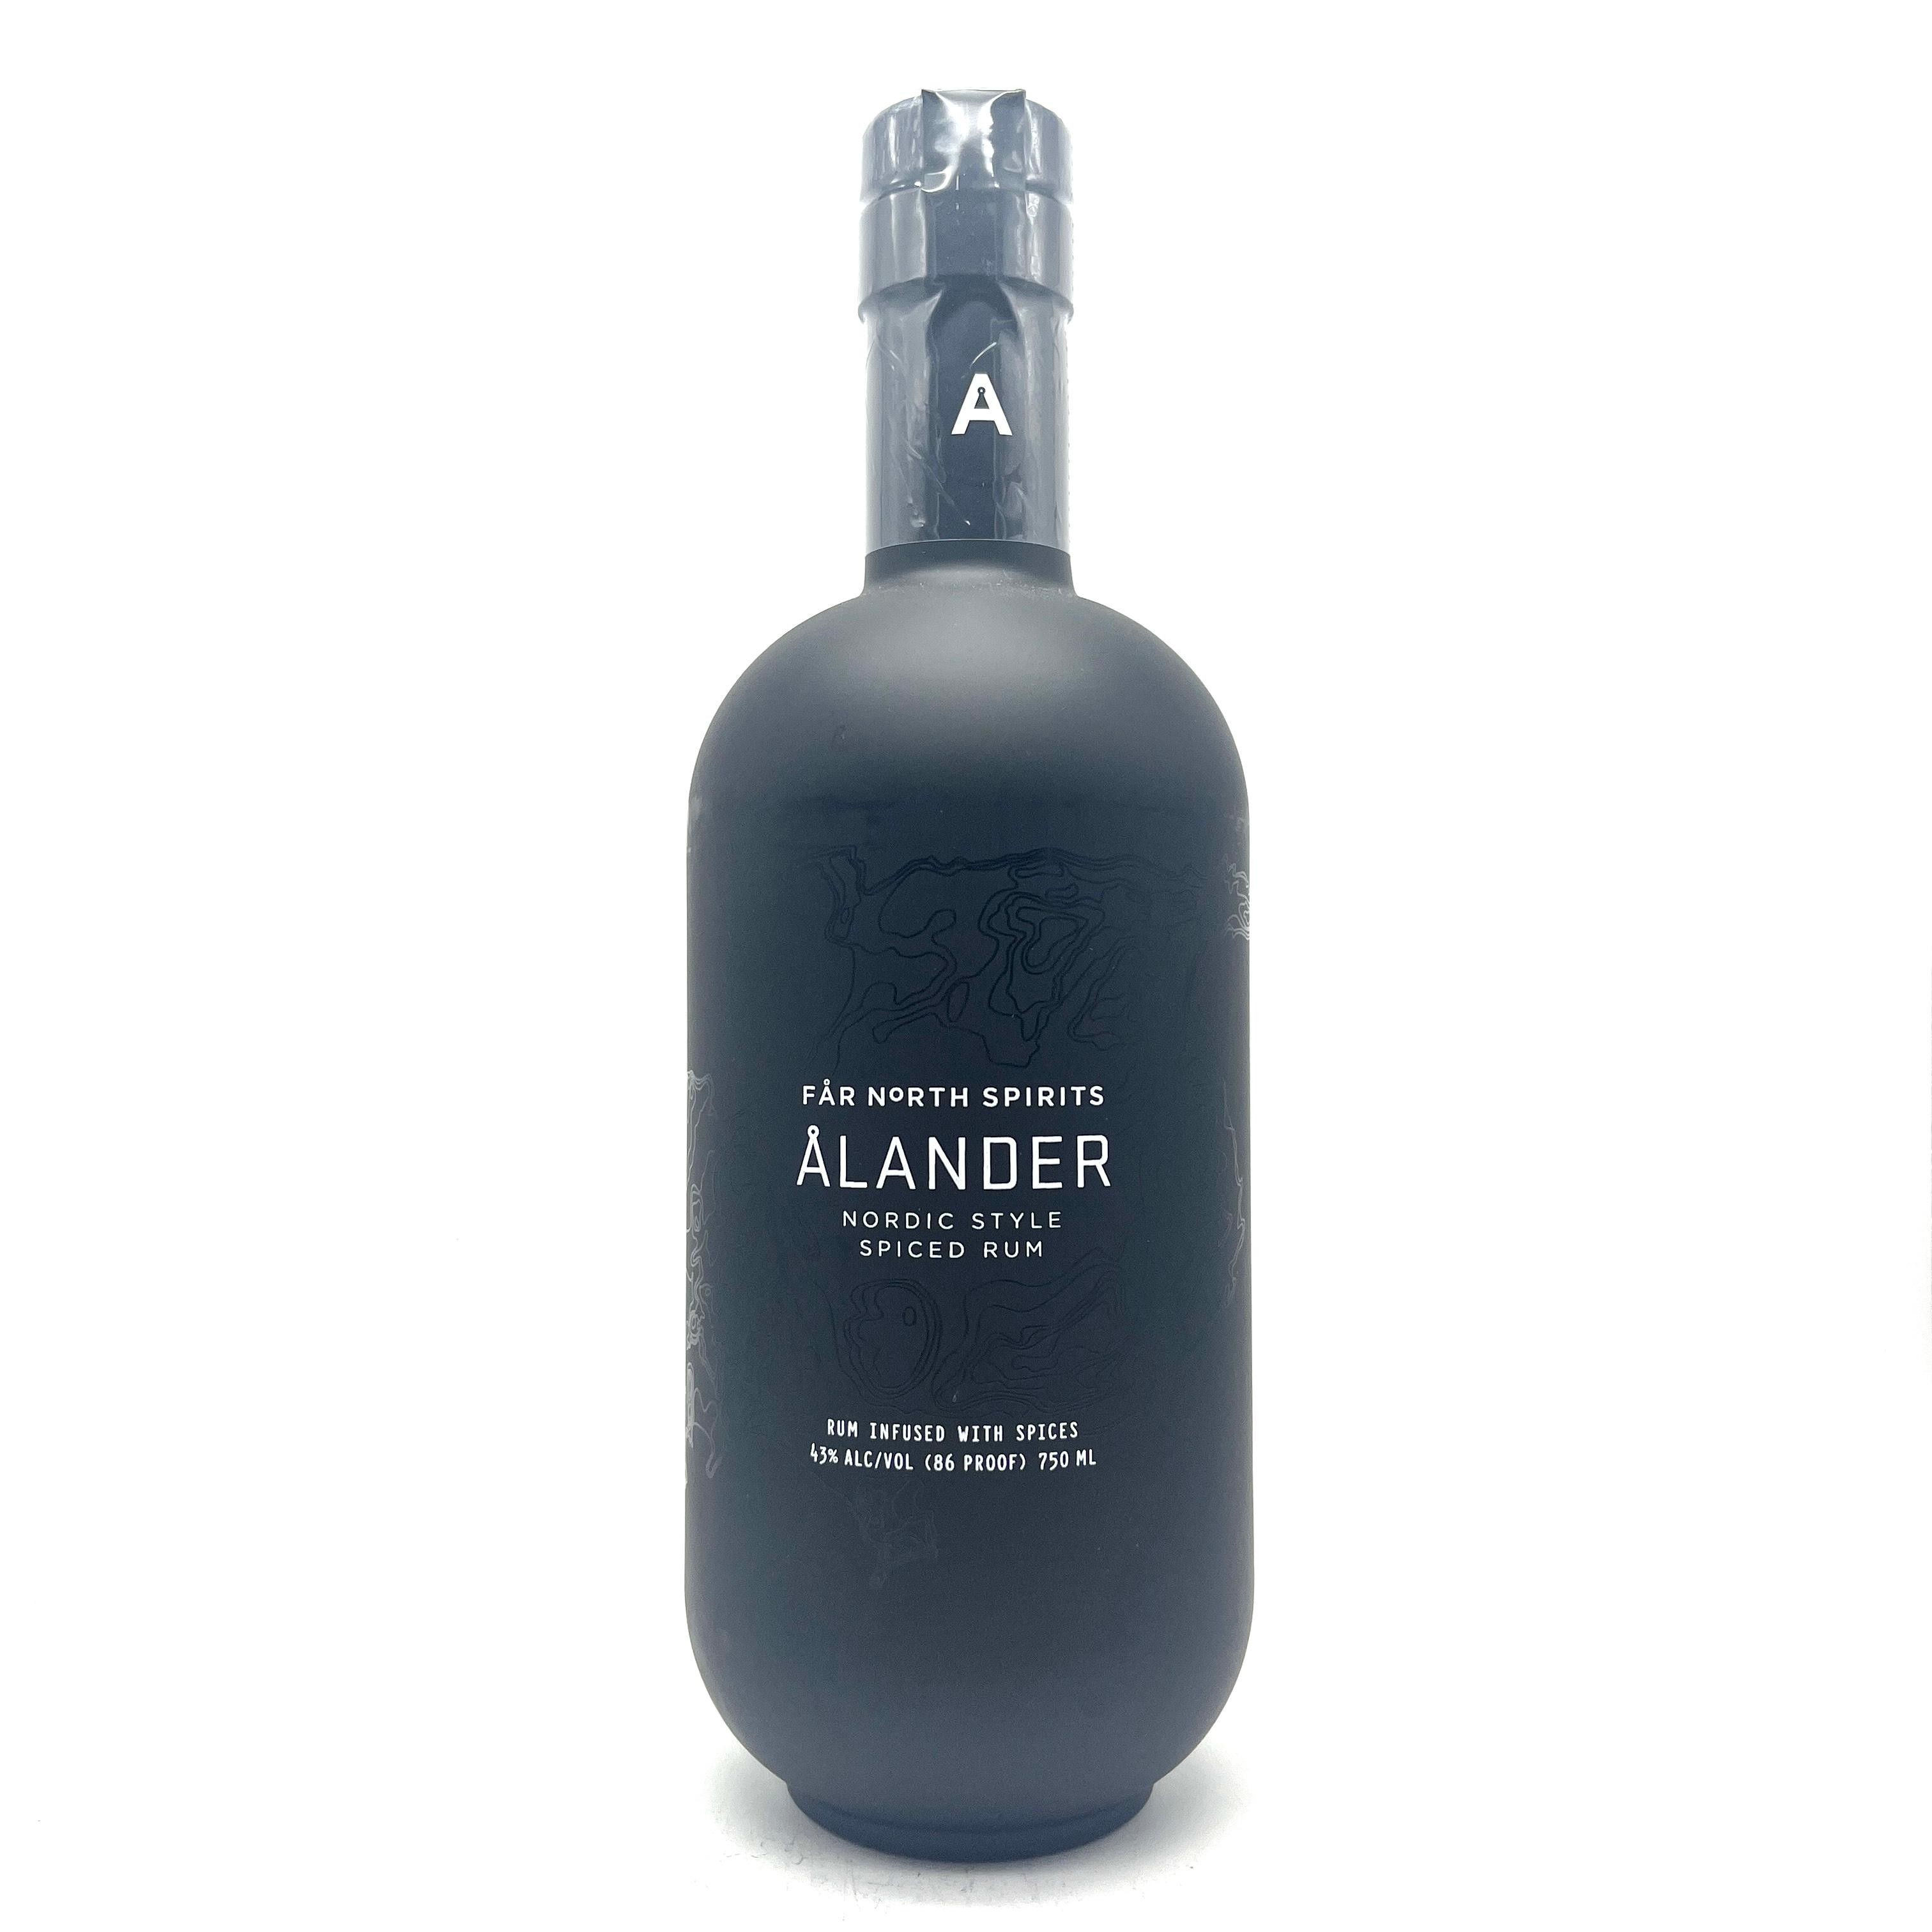 Far North Spirits 'Alander' Nordic Spiced Rum